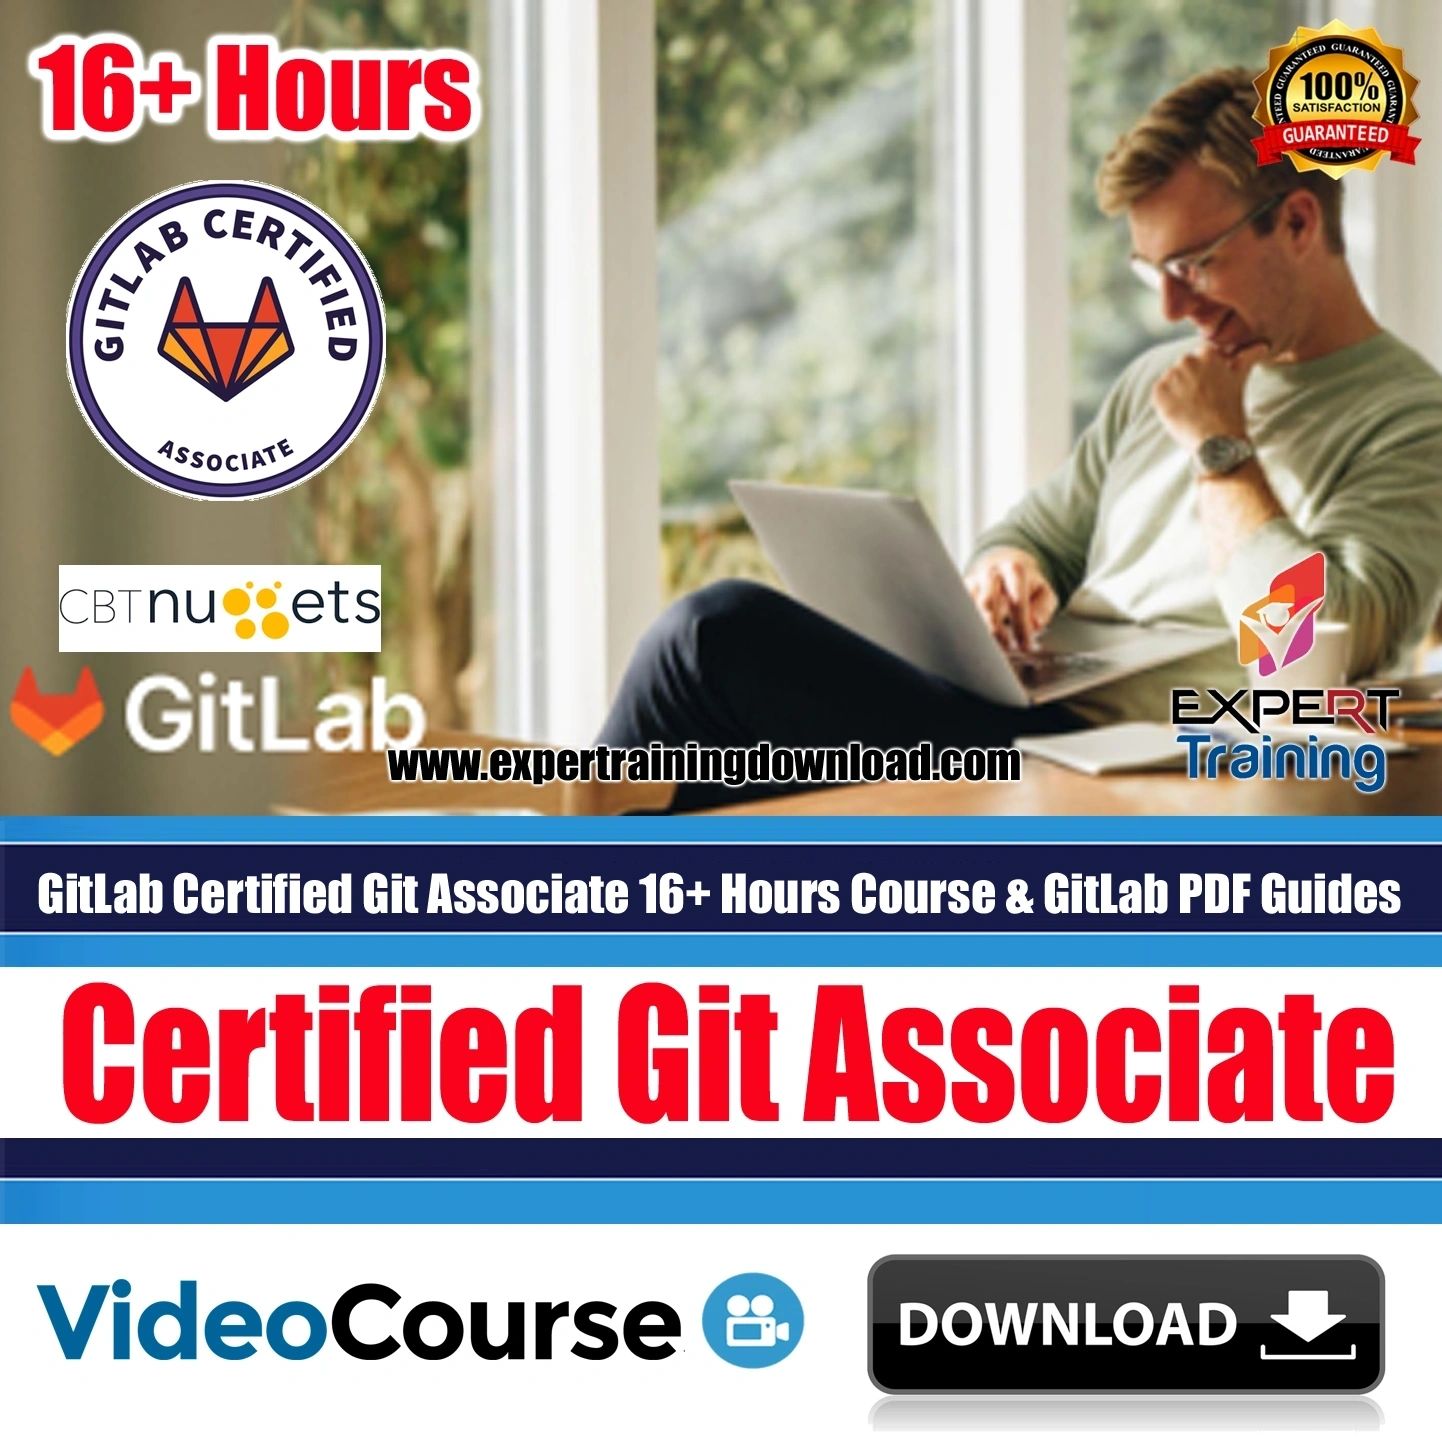 GitLab Certified Git Associate 16+ Hours Course & GitLab PDF Guides